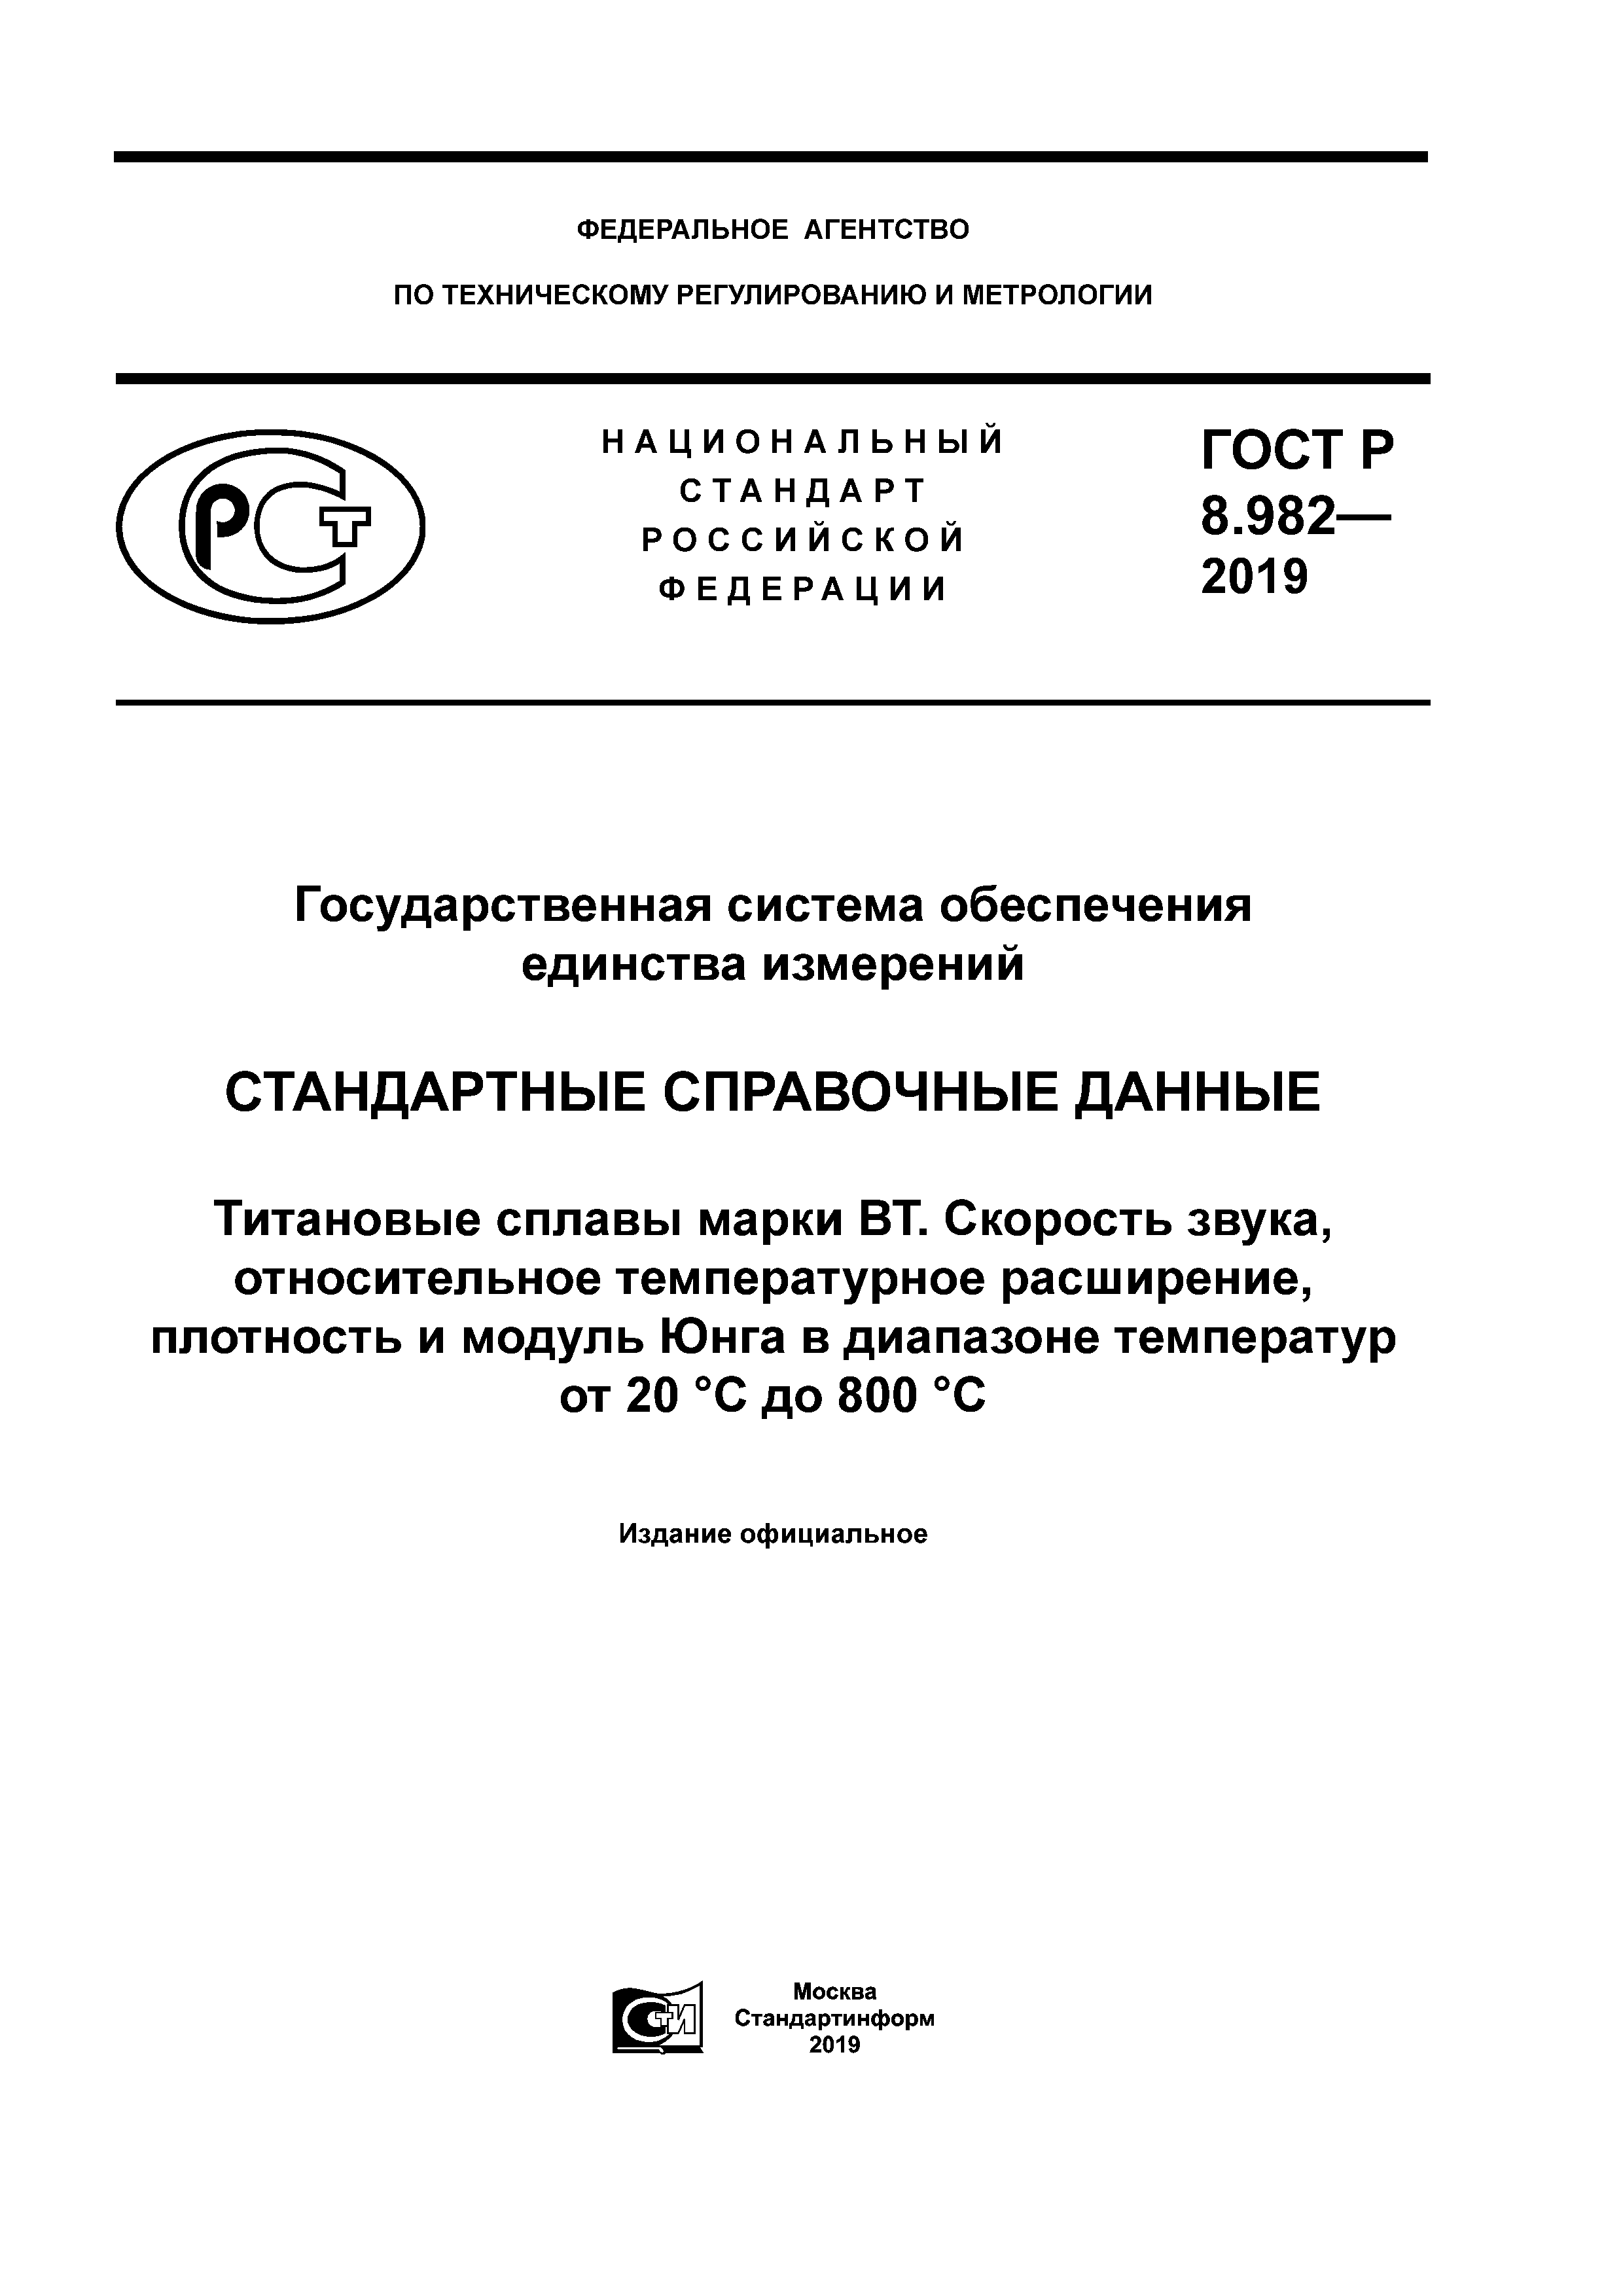 ГОСТ Р 8.982-2019